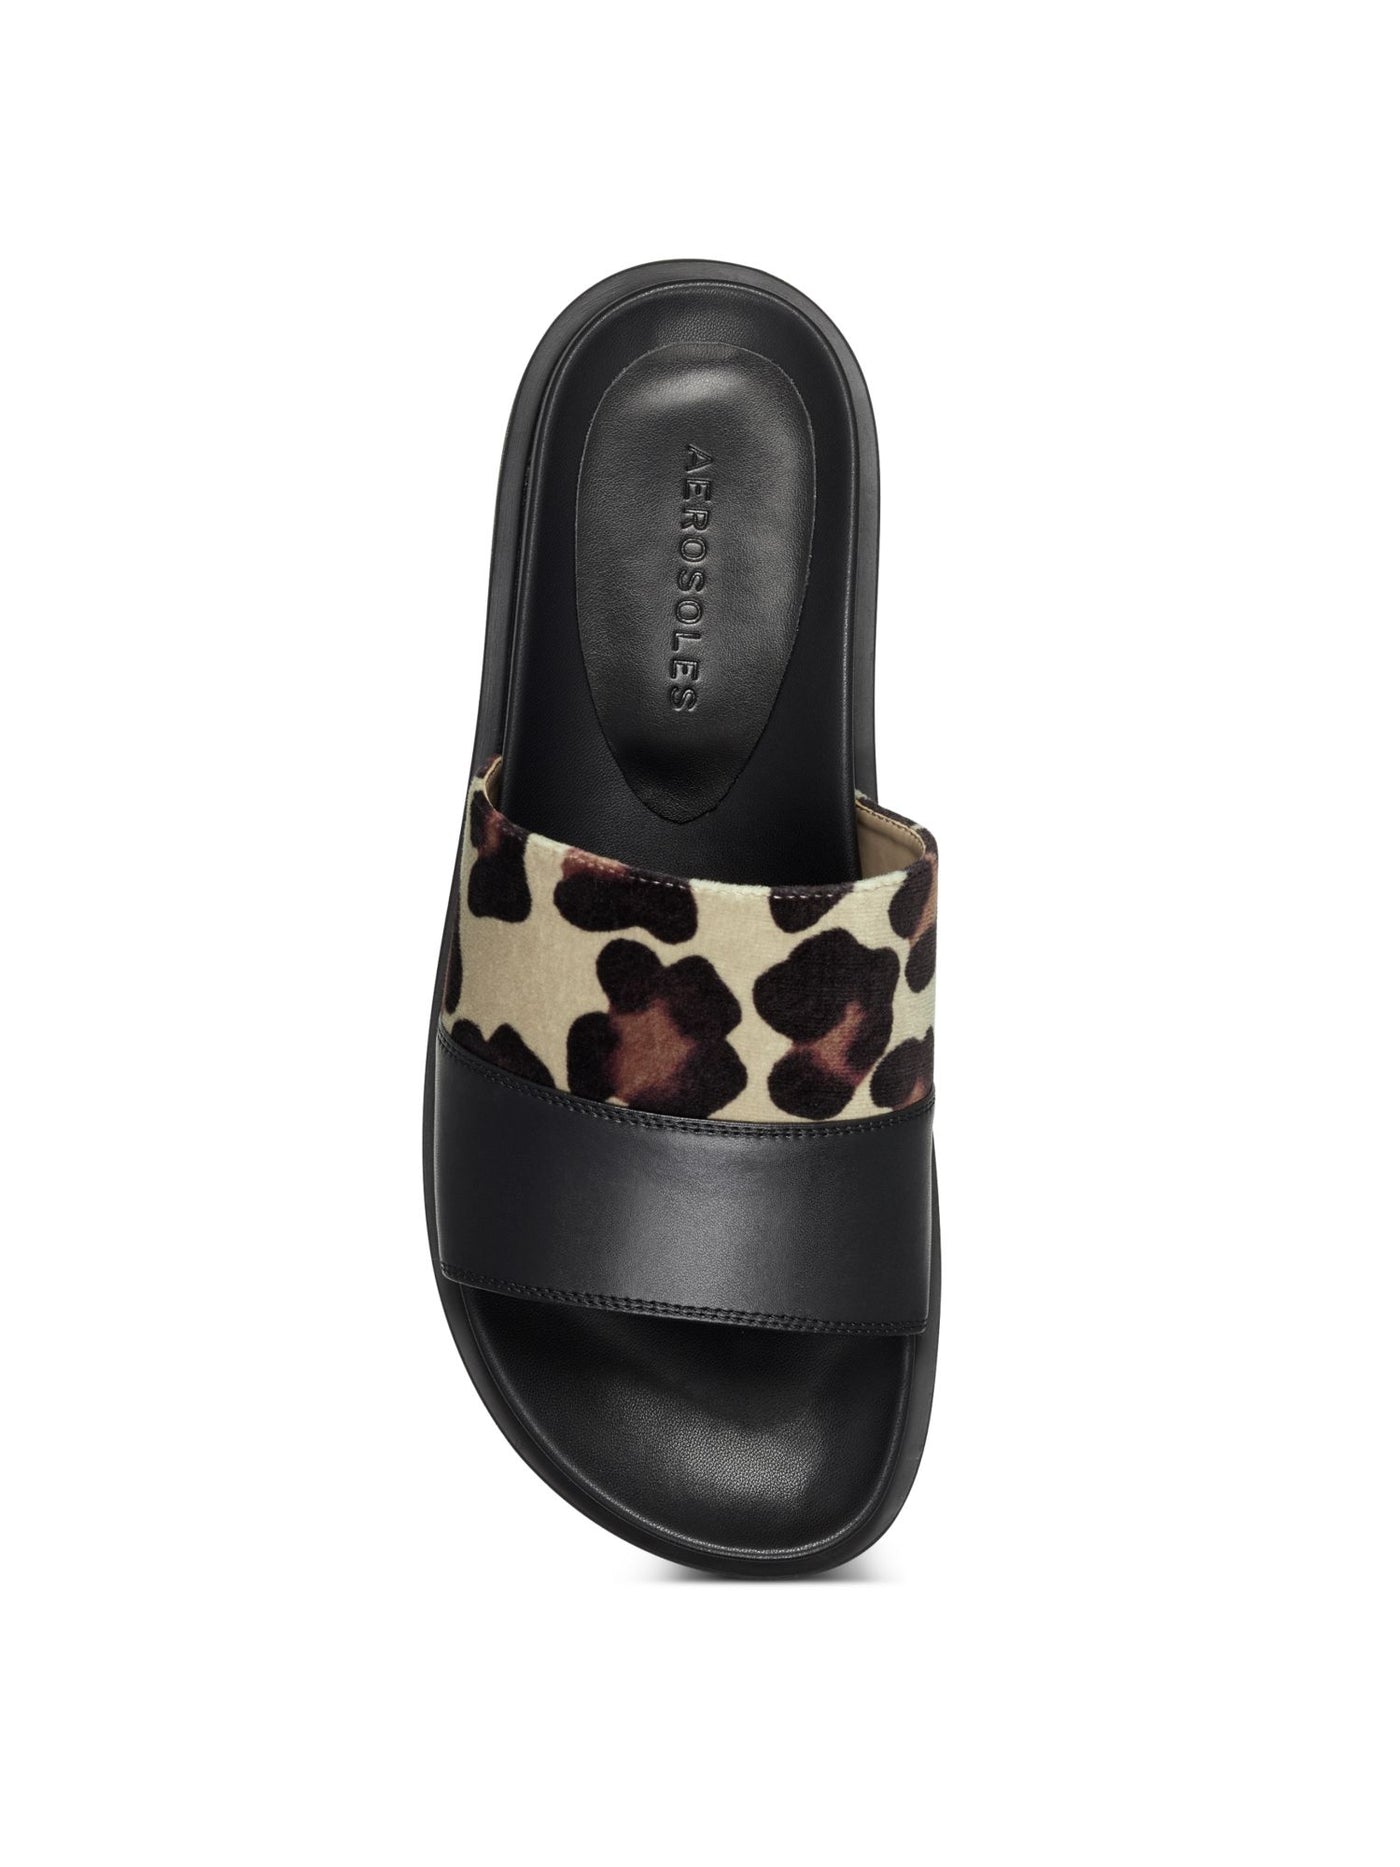 AREOSOLES MARTHA STEWART Womens Black Animal Print Louie Round Toe Slip On Slide Sandals Shoes 7 M